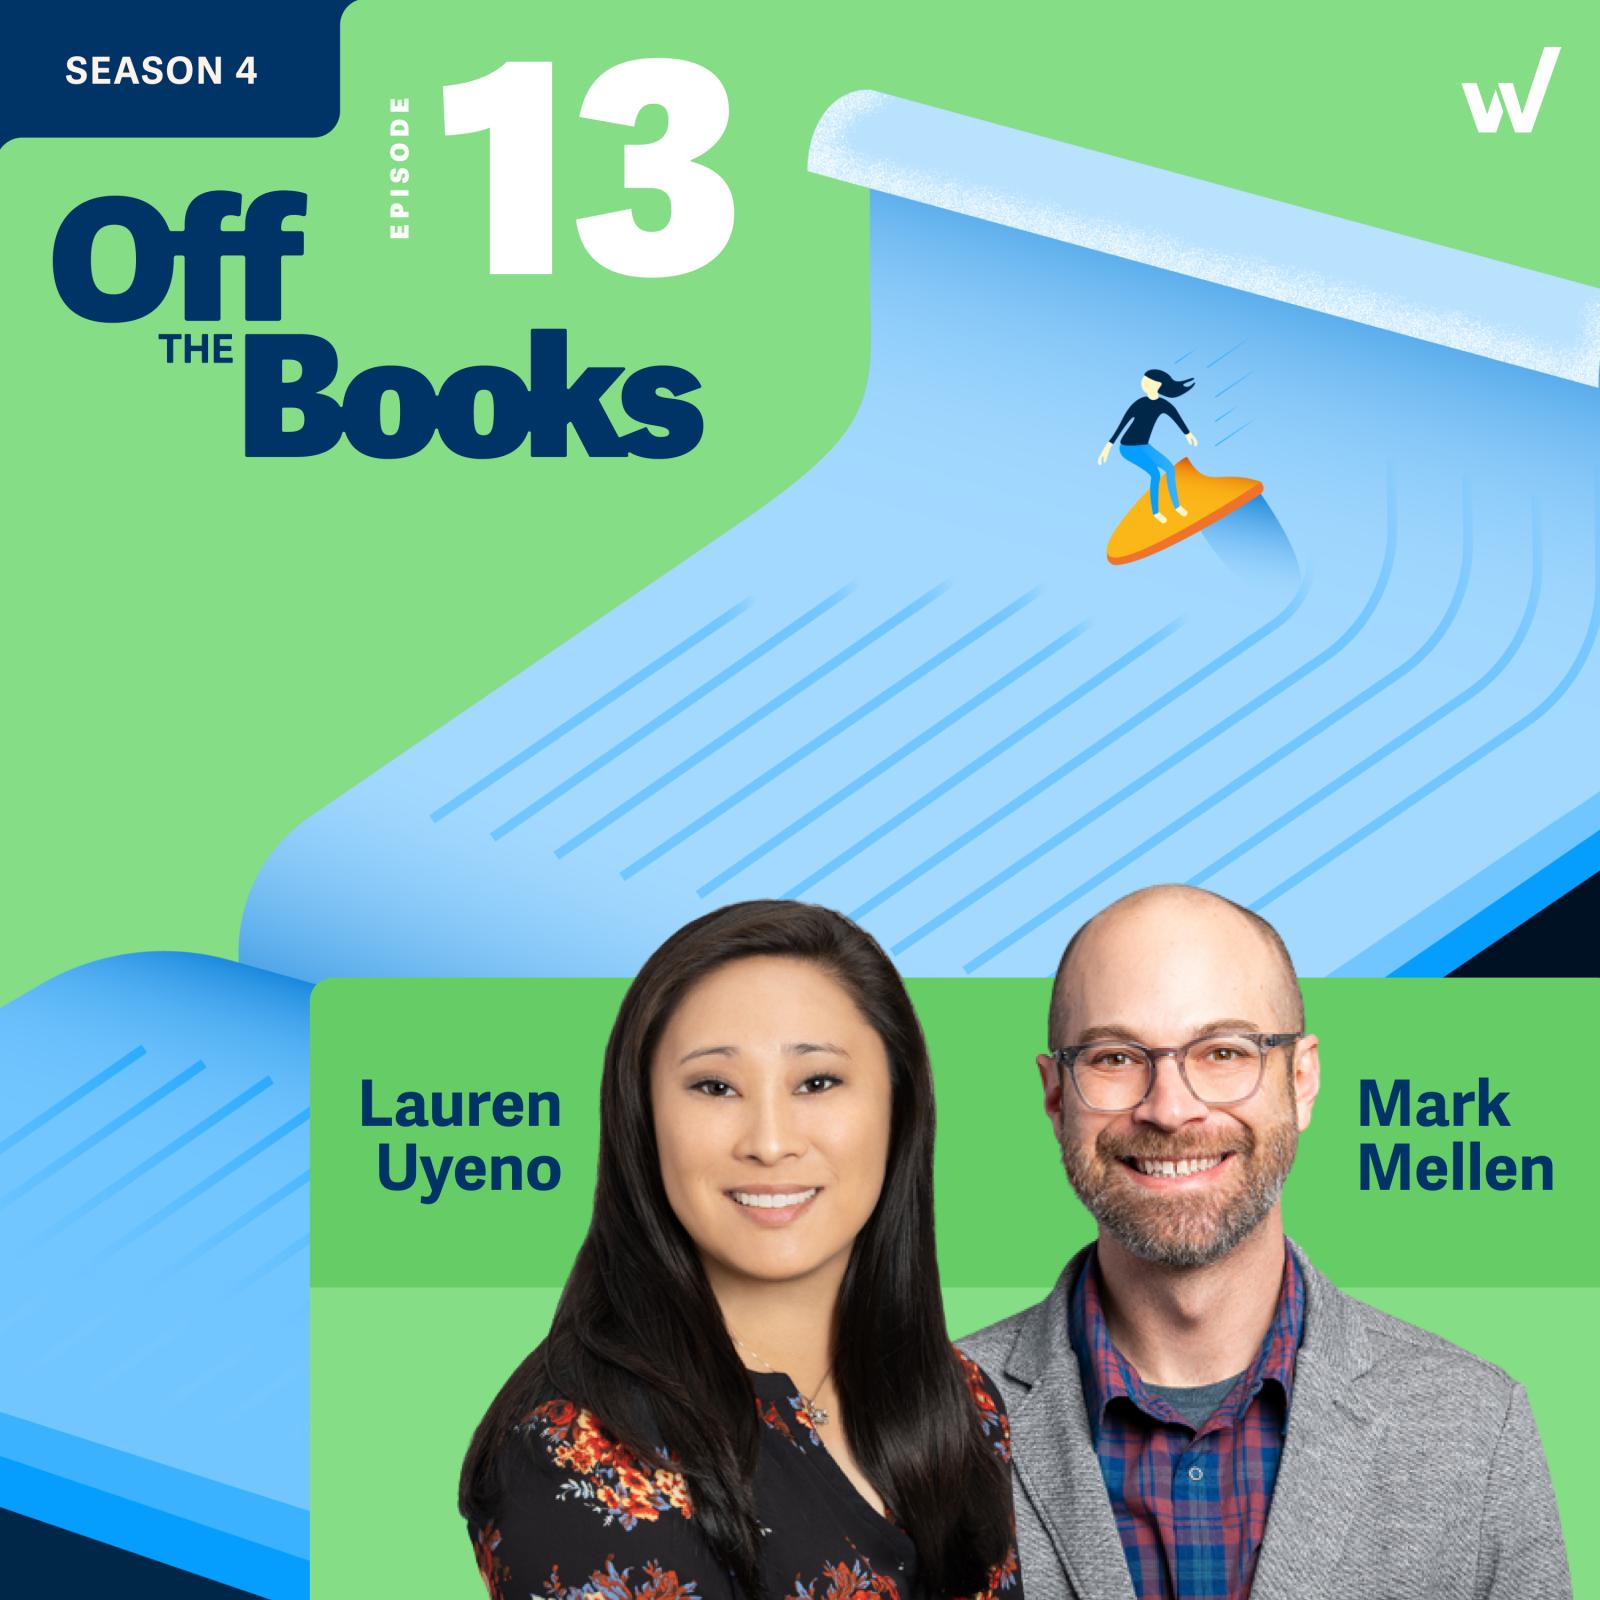 Off the Books Season 4, Episode 13 with Lauren Uyeno and Mark Mellen